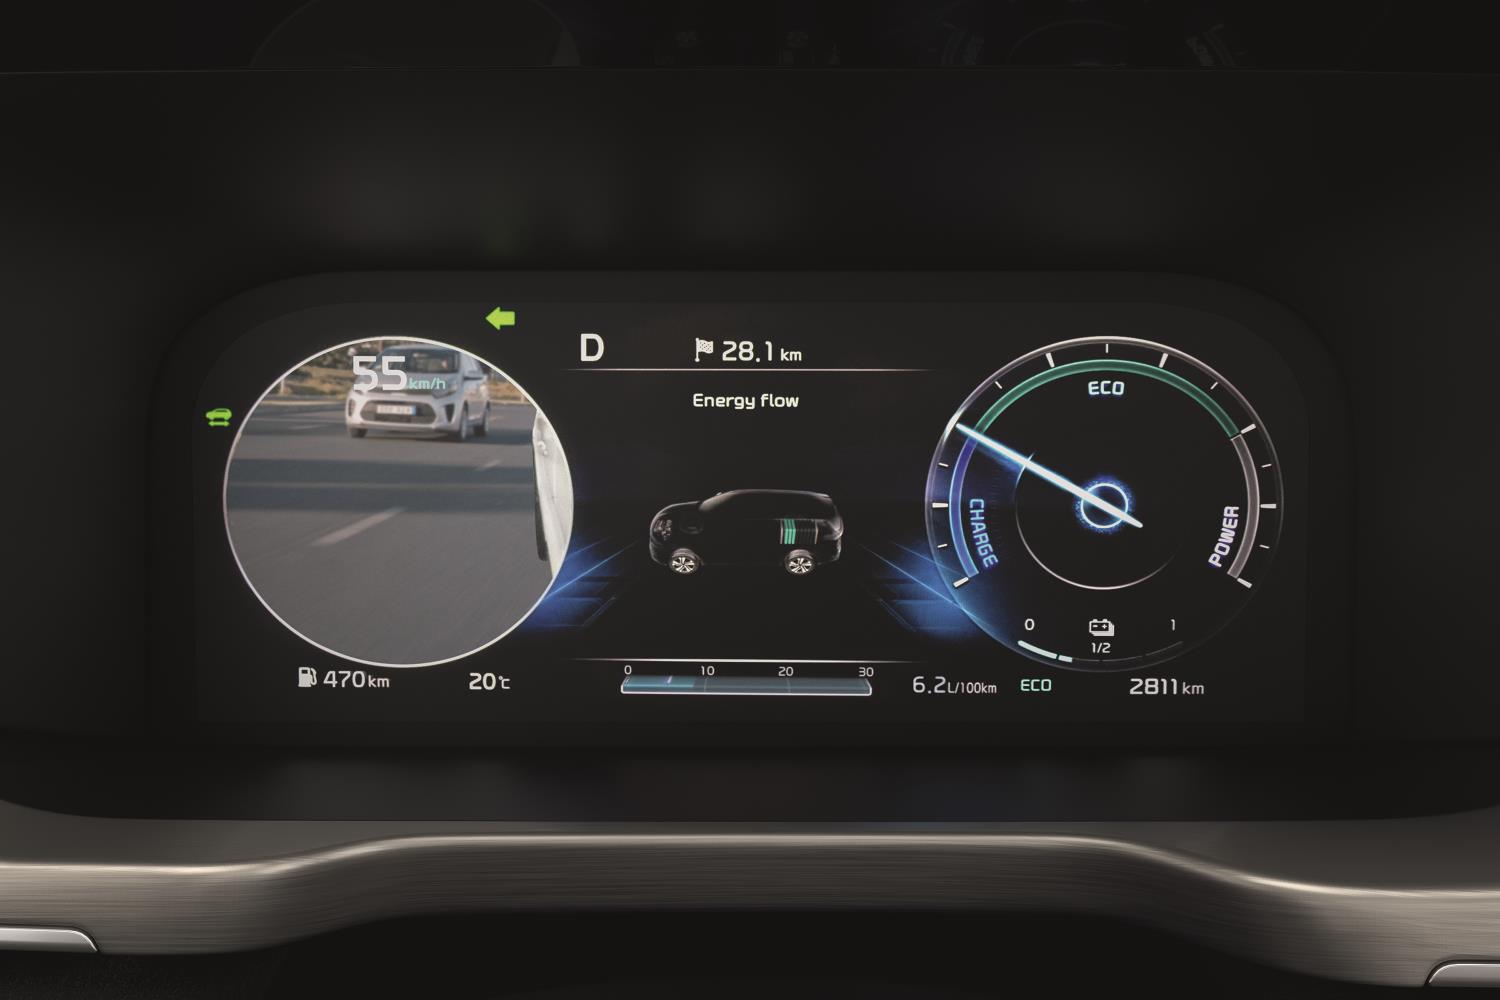 Kia Sorento dashboard with blind-spot view monitor (BVM)